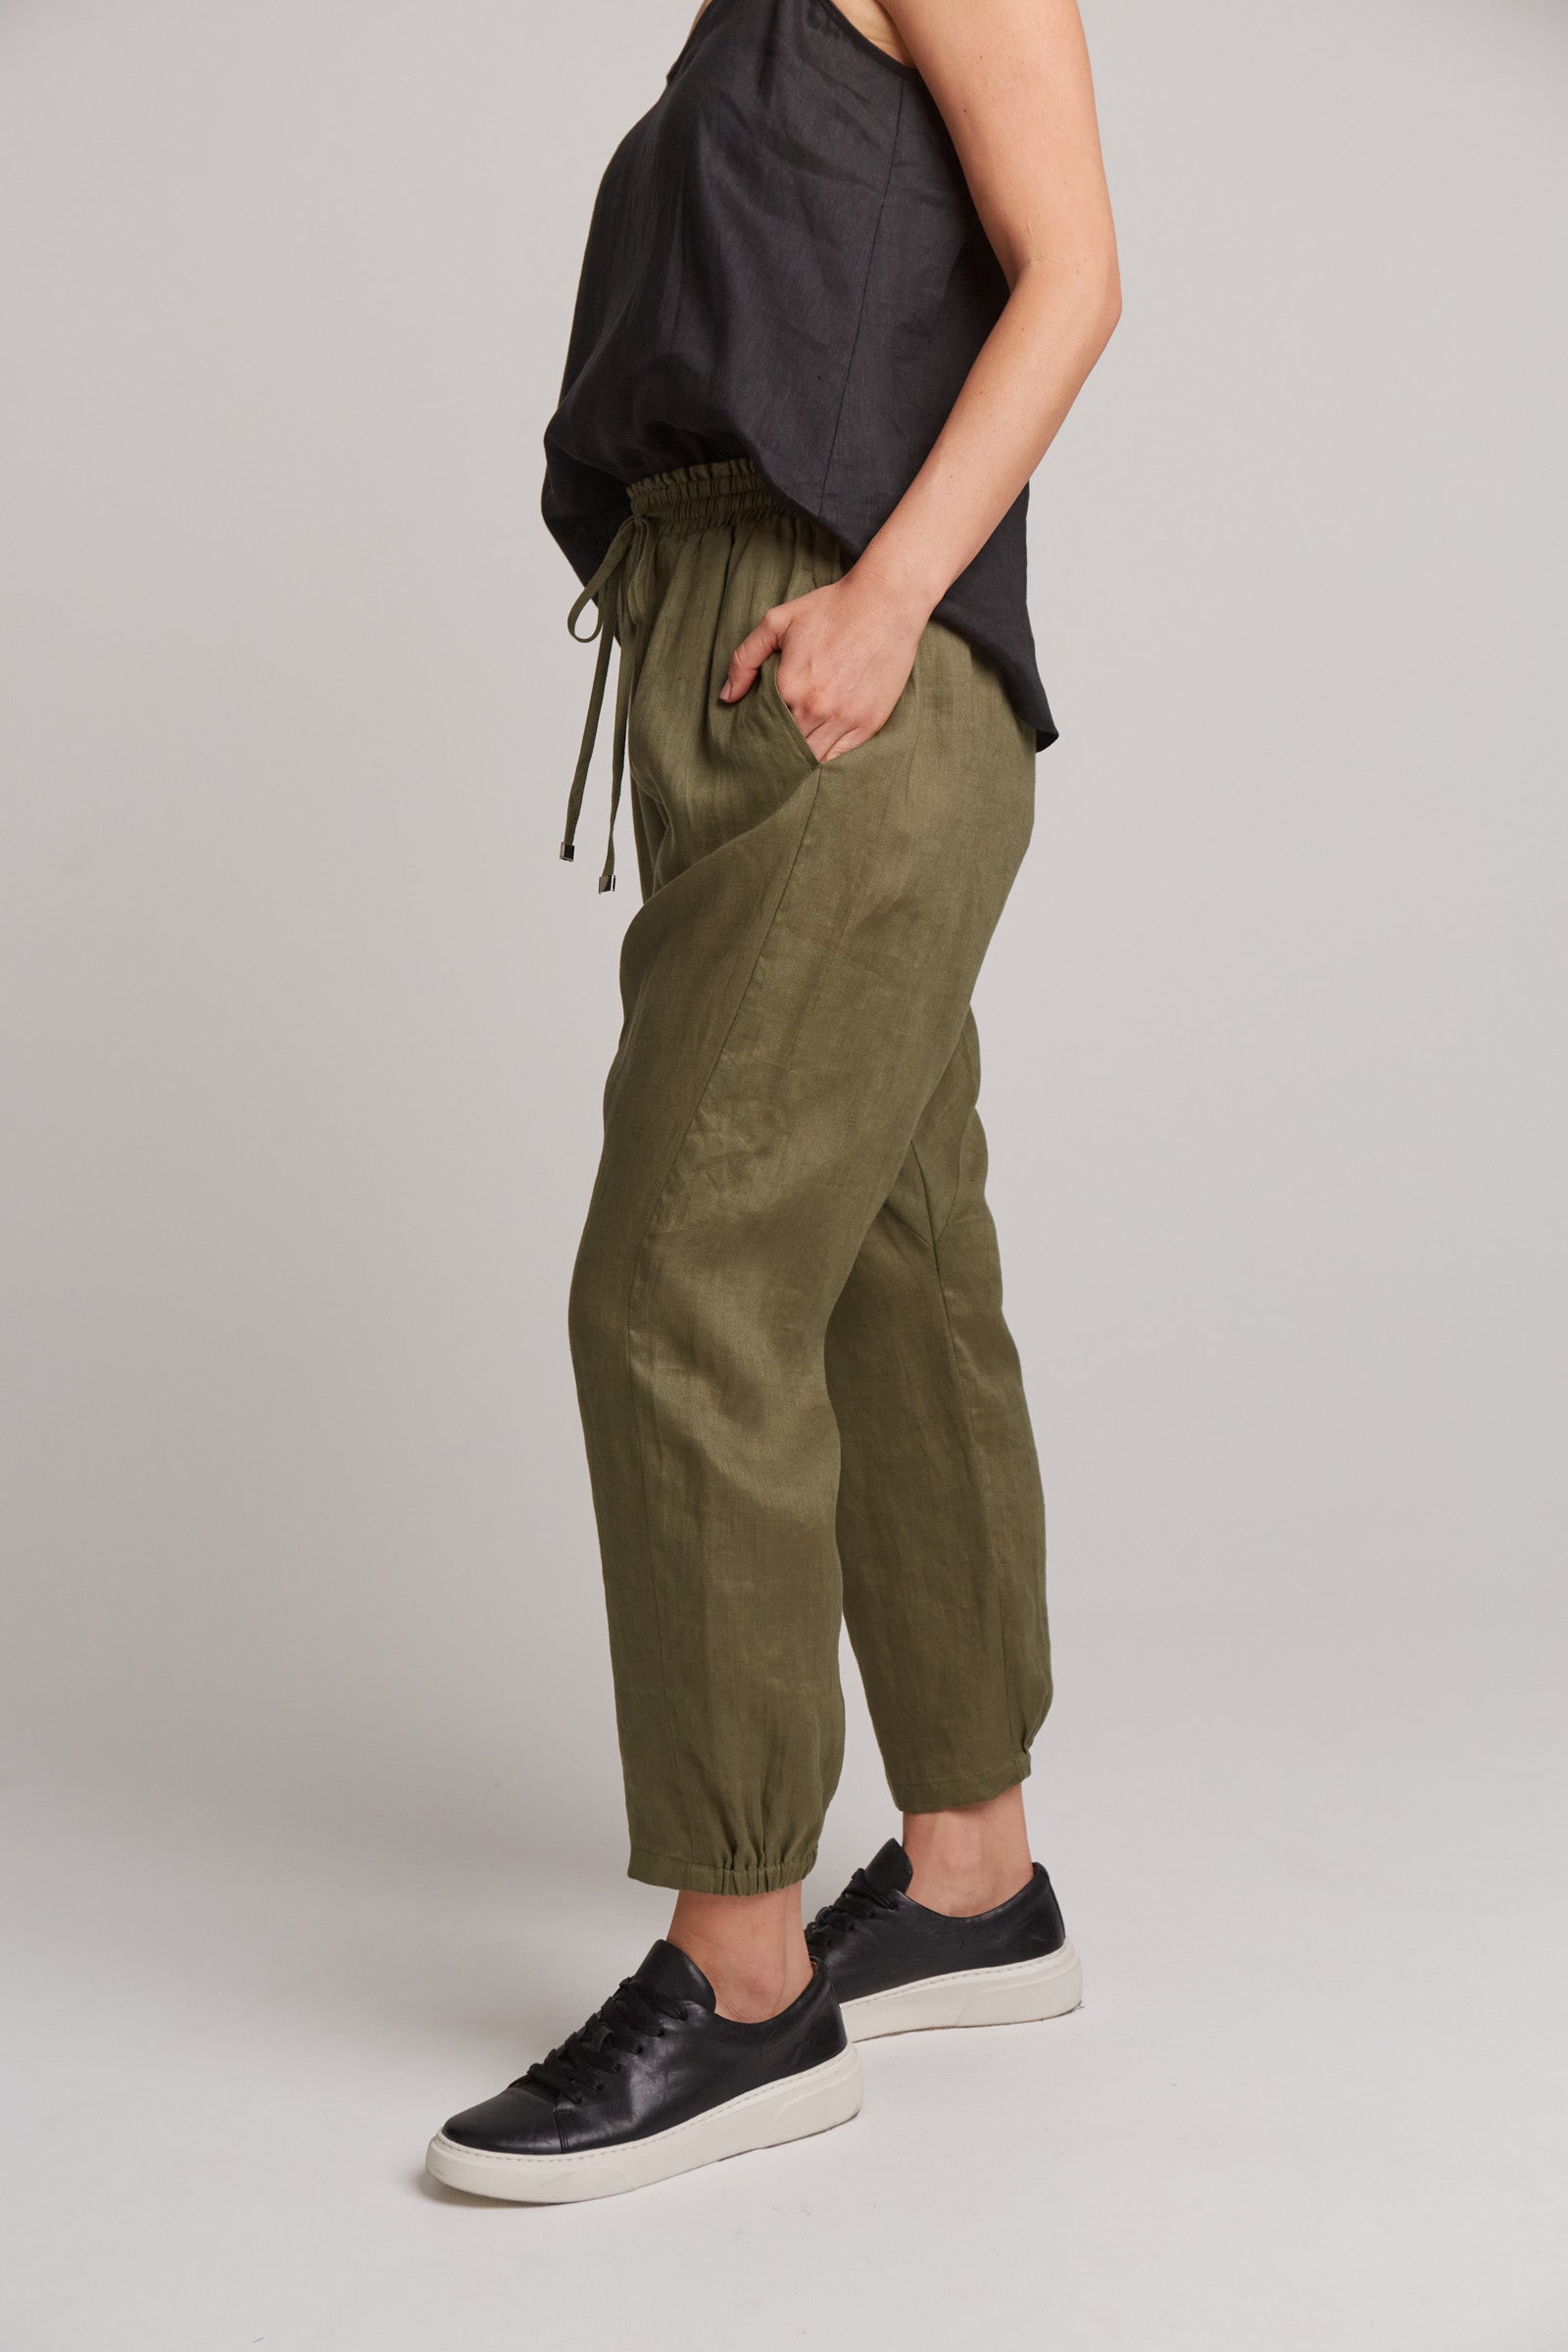 Quince Women's Olive Green European Linen Pants sz M Relaxed Elastic Waist  -po